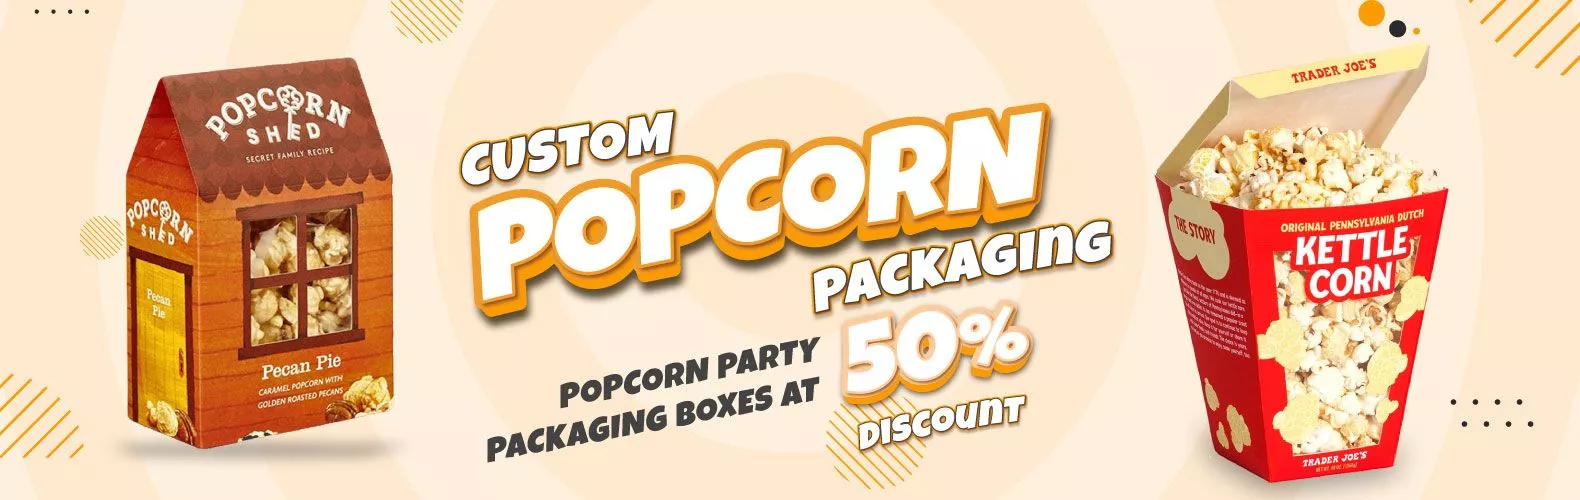 popcorn banner